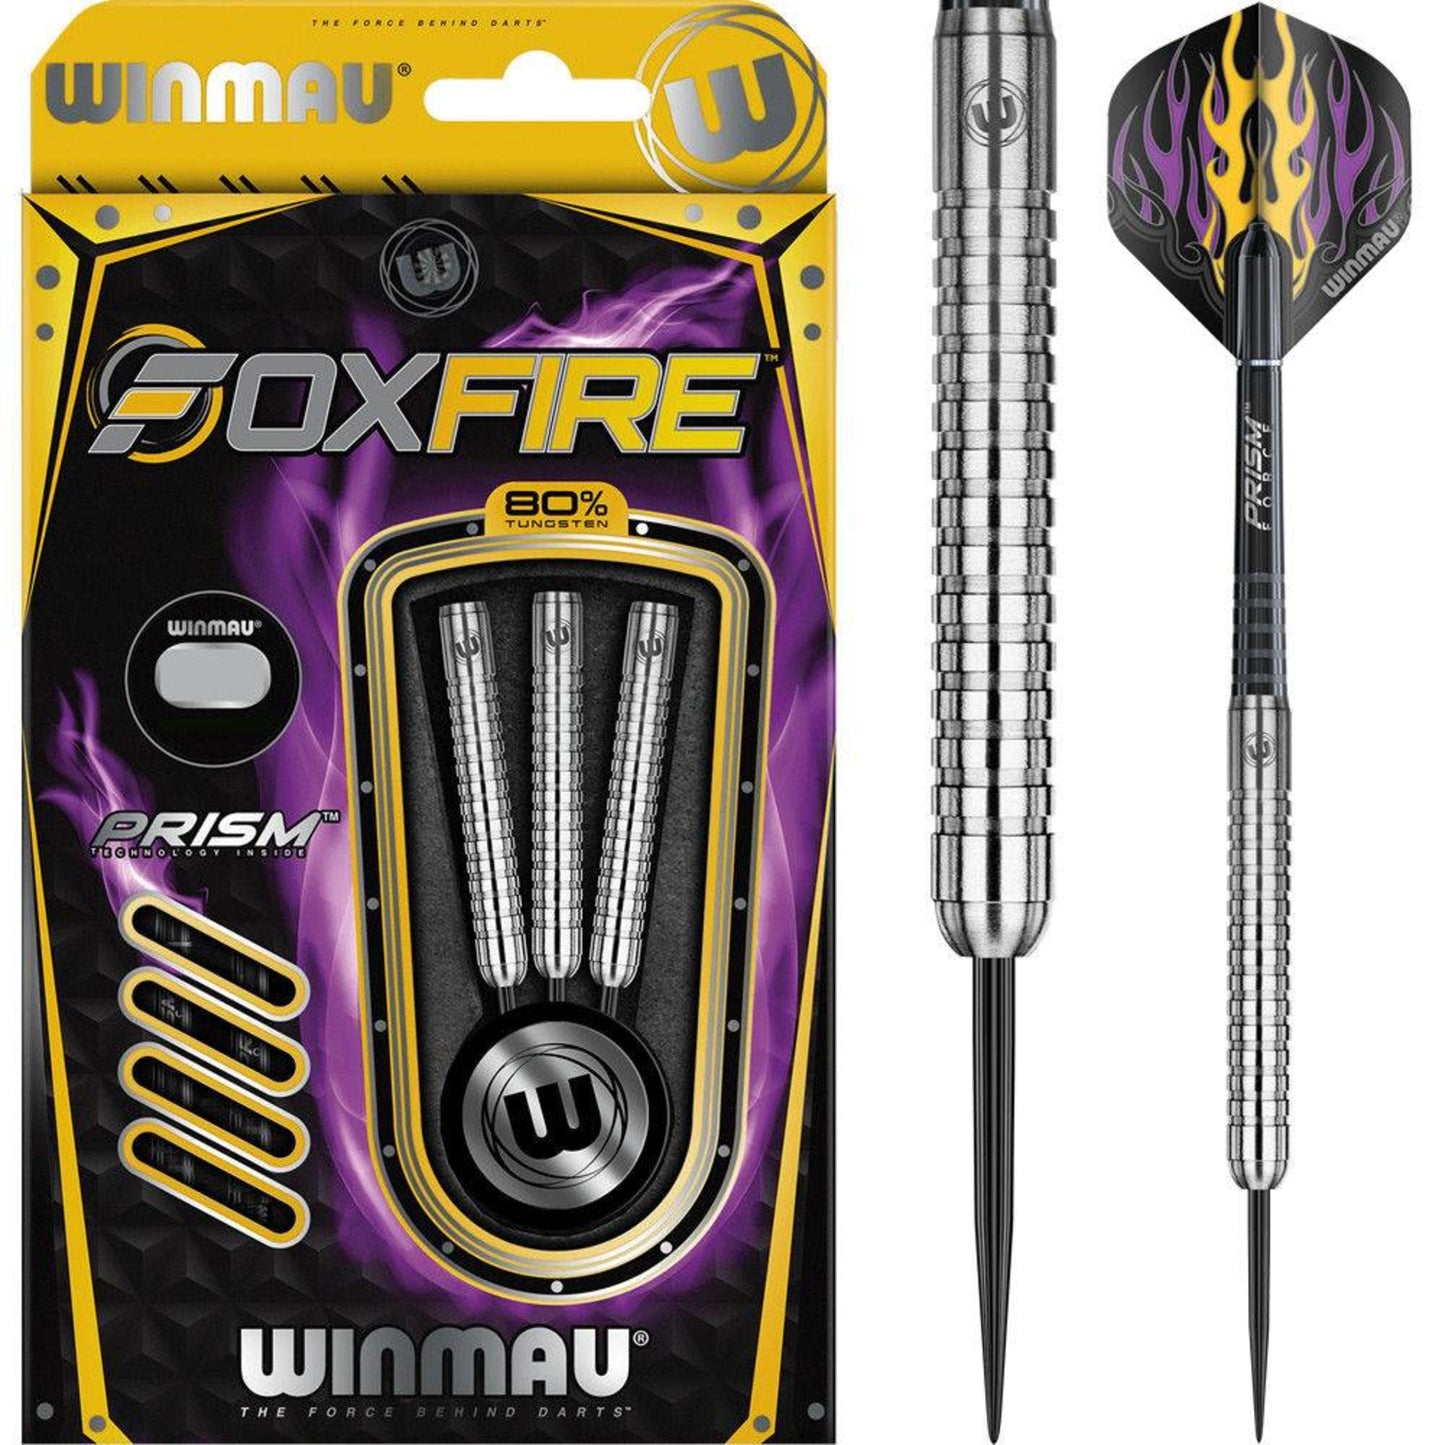 Winmau - Foxfire - 80%